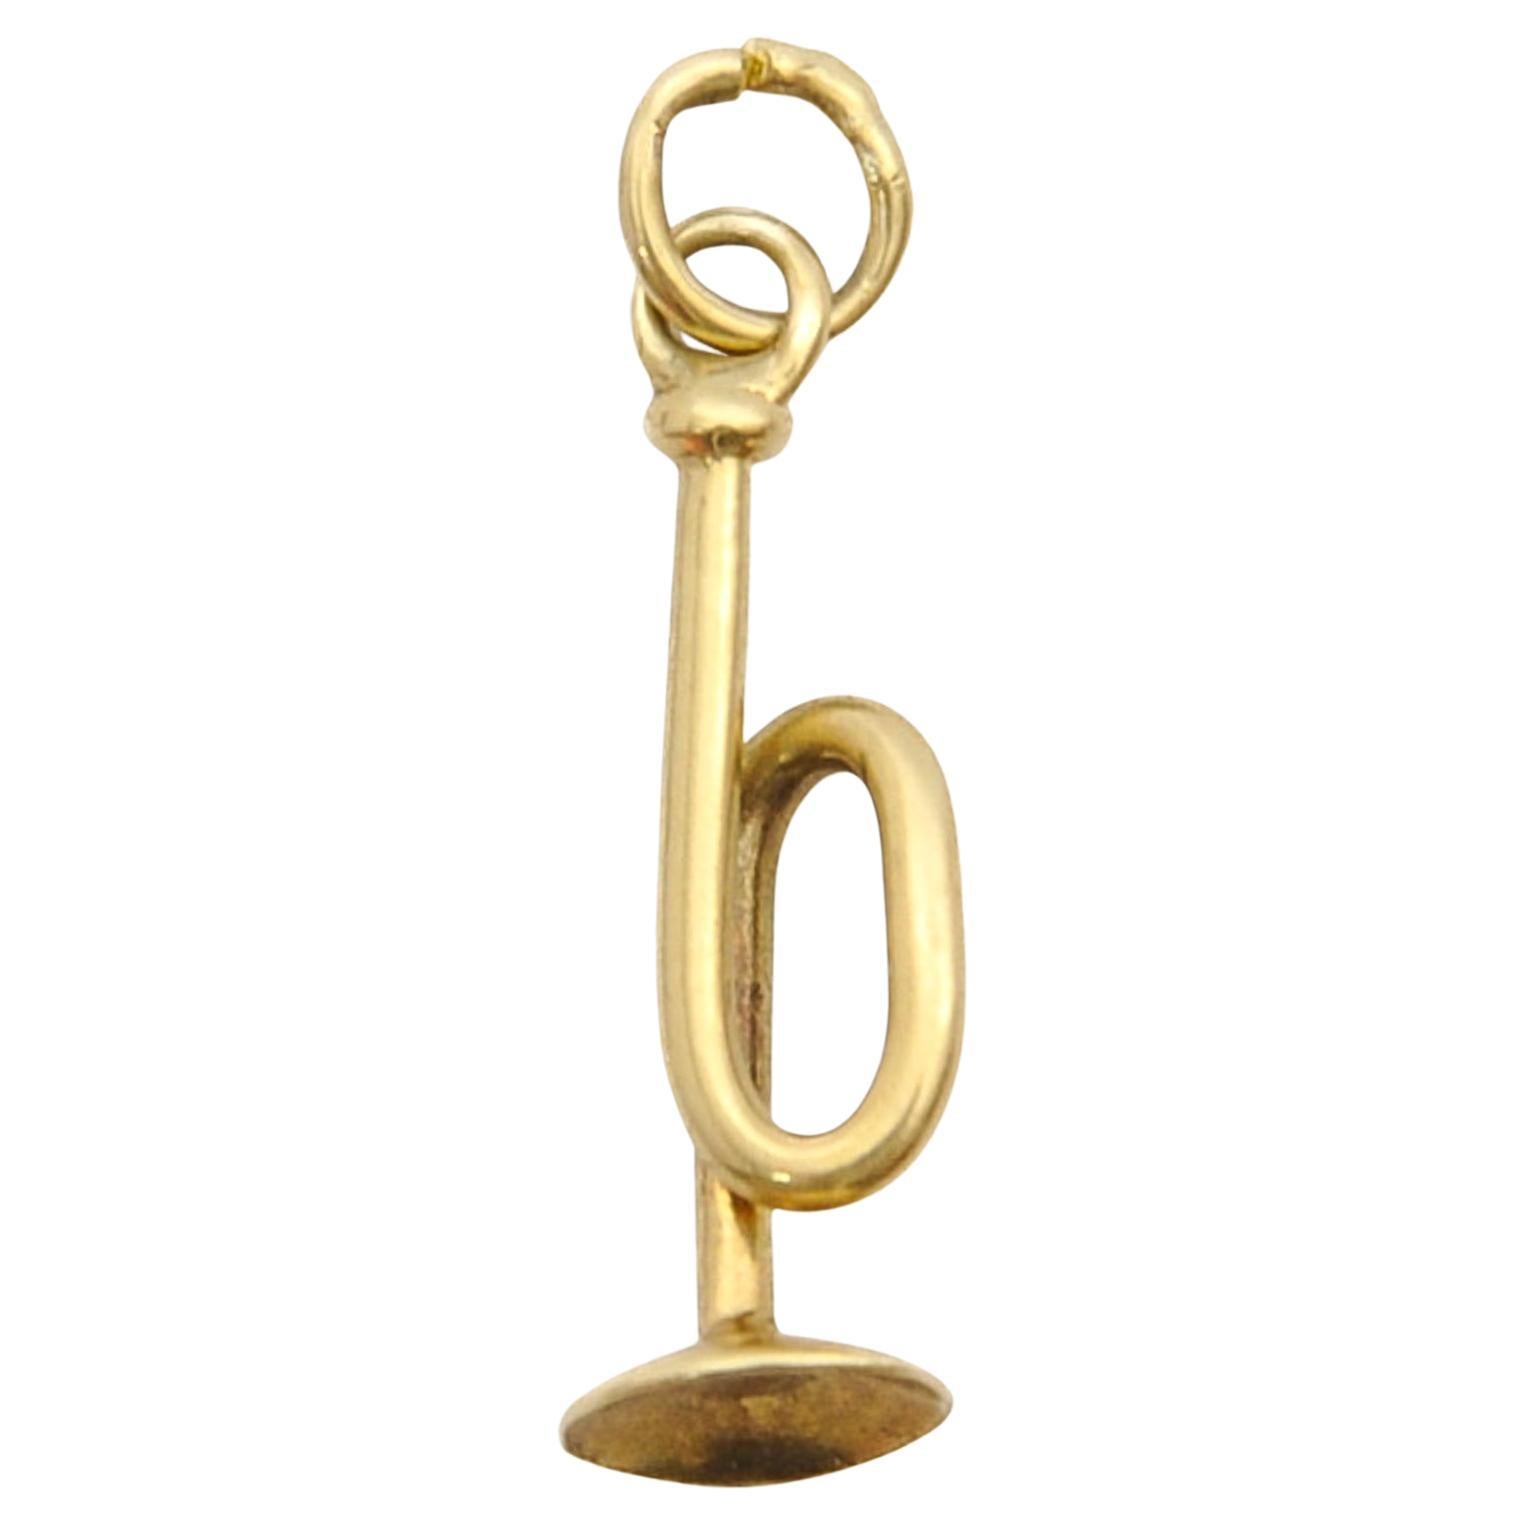 Vintage 14 Karat Gold Trumpet Charm Pendant